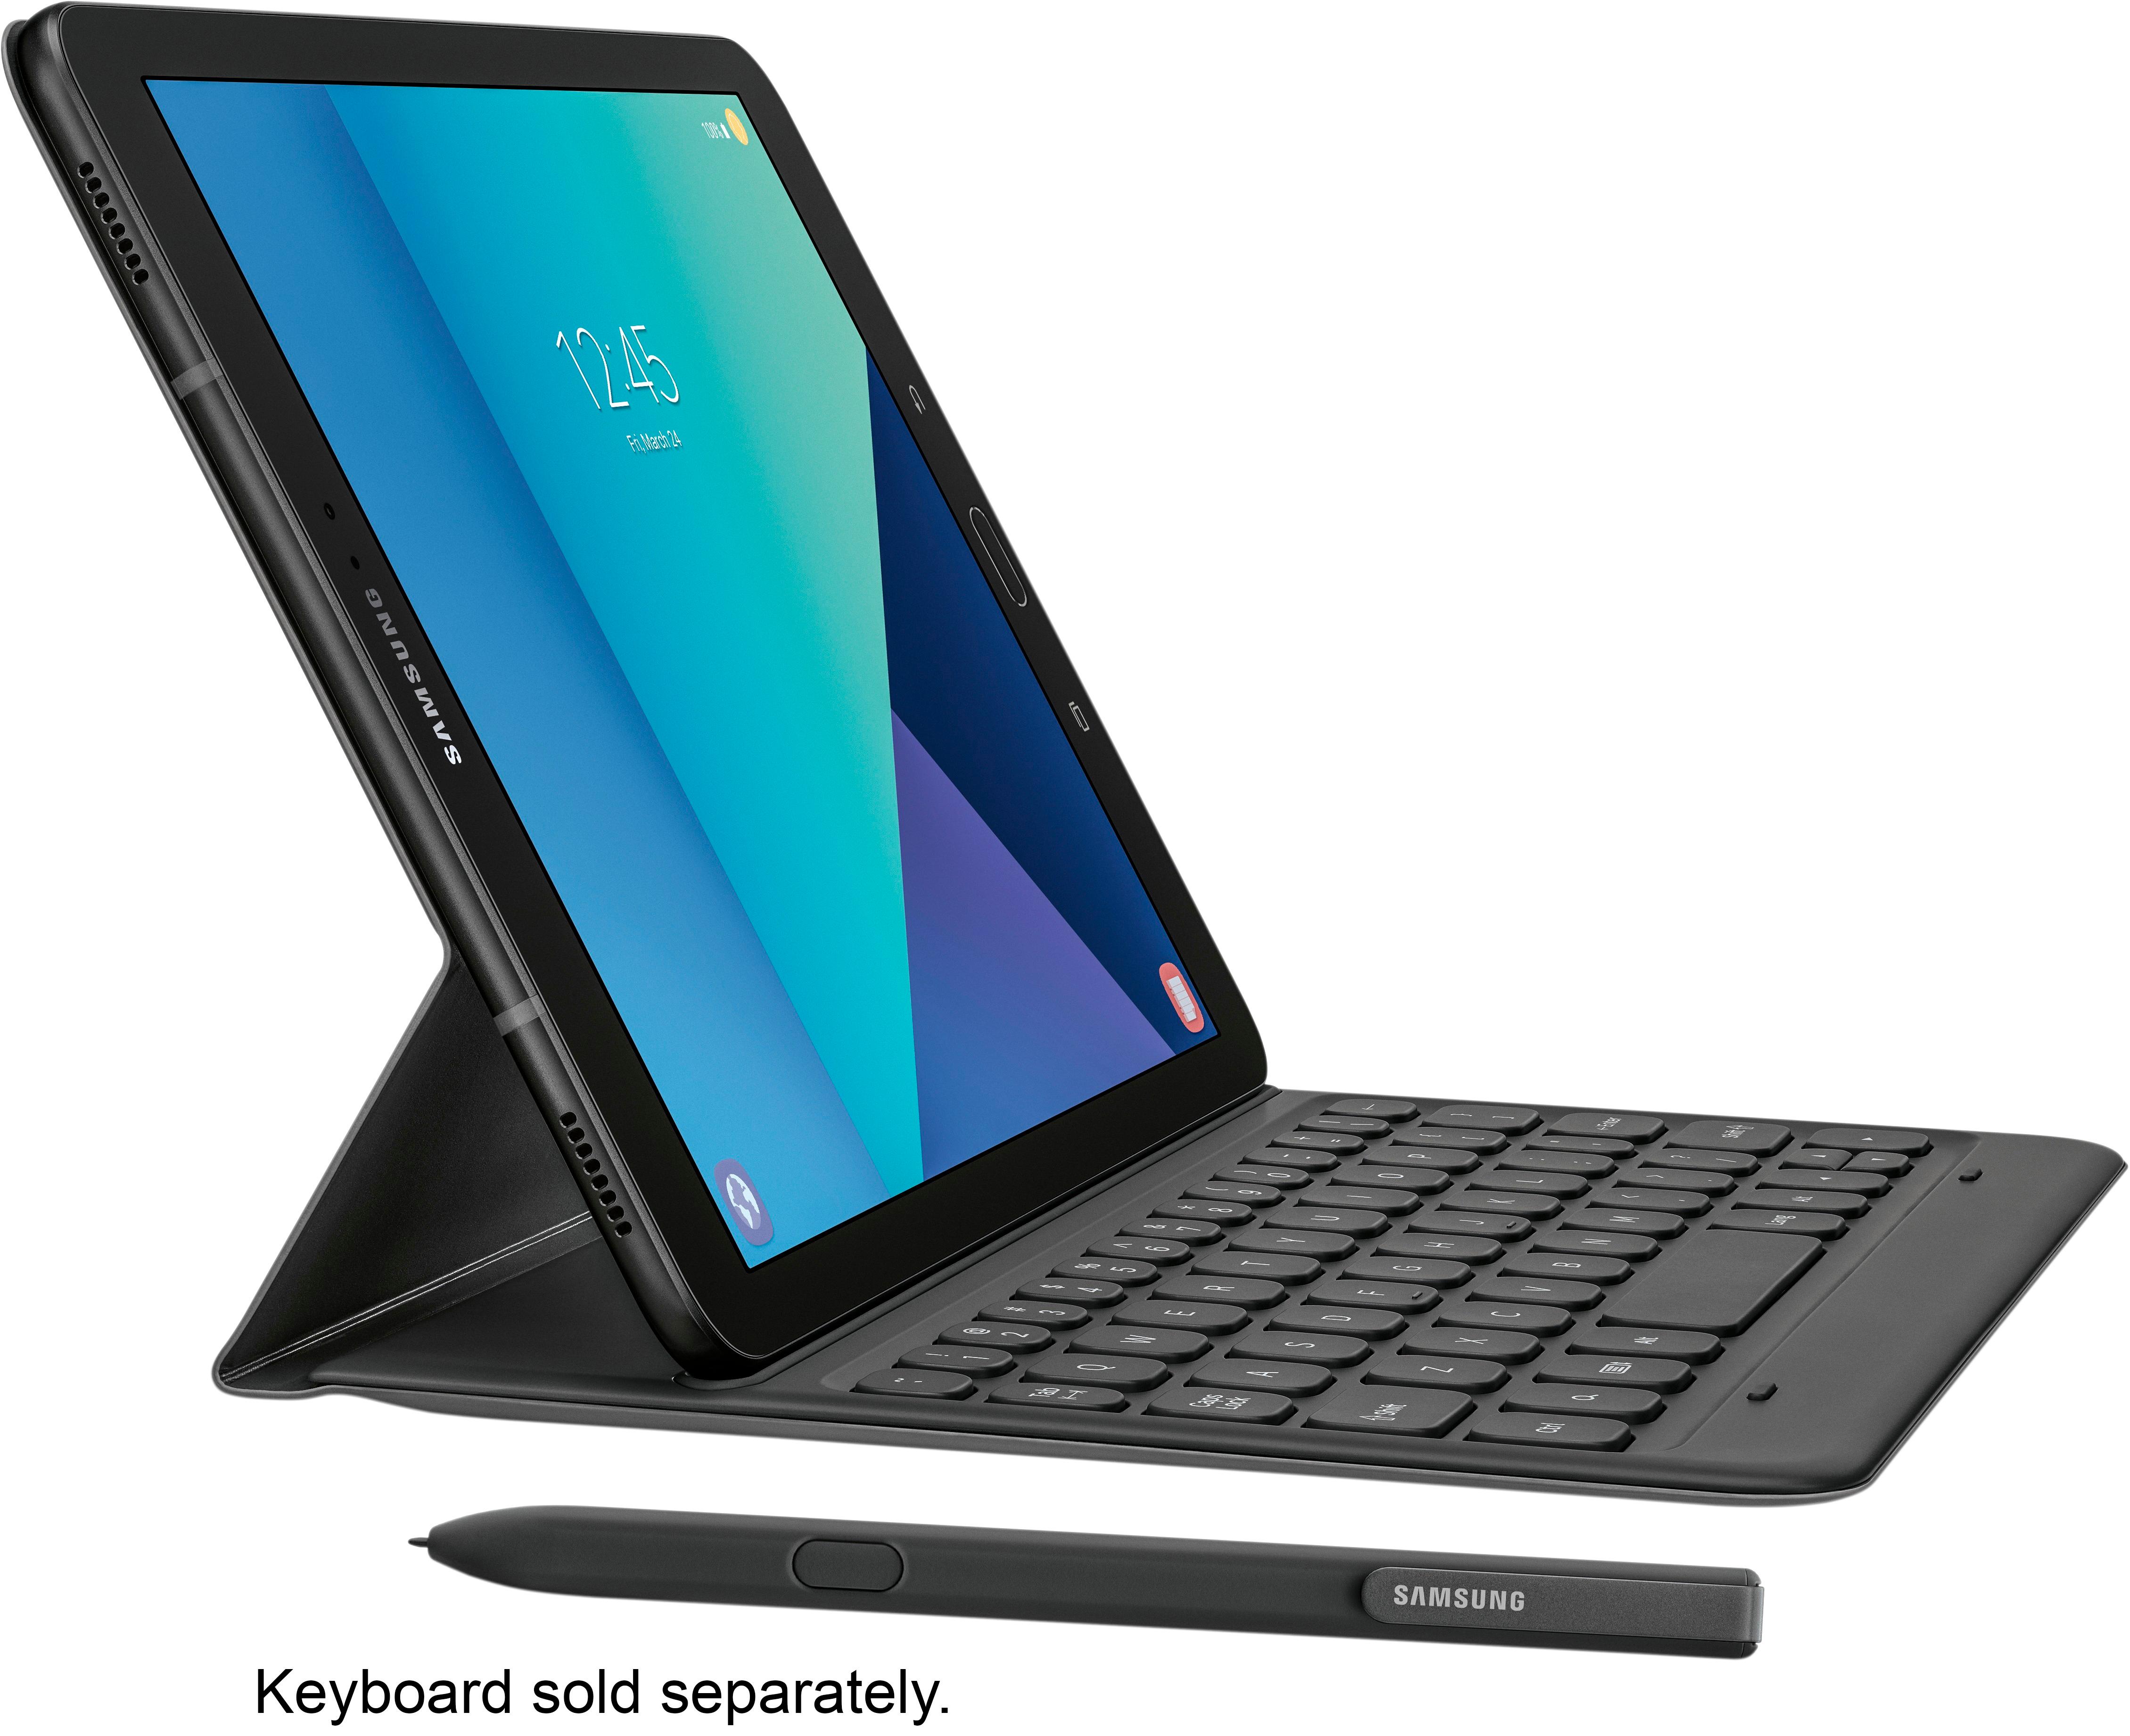 Samsung Galaxy Tab S3 - Tablette - Android 7.0 (Nougat) - 32 Go - 9.7  Super AMOLED (2048 x 1536) - Logement microSD - noir (SM-T820NZKAXAC), Tablettes et appareils portables